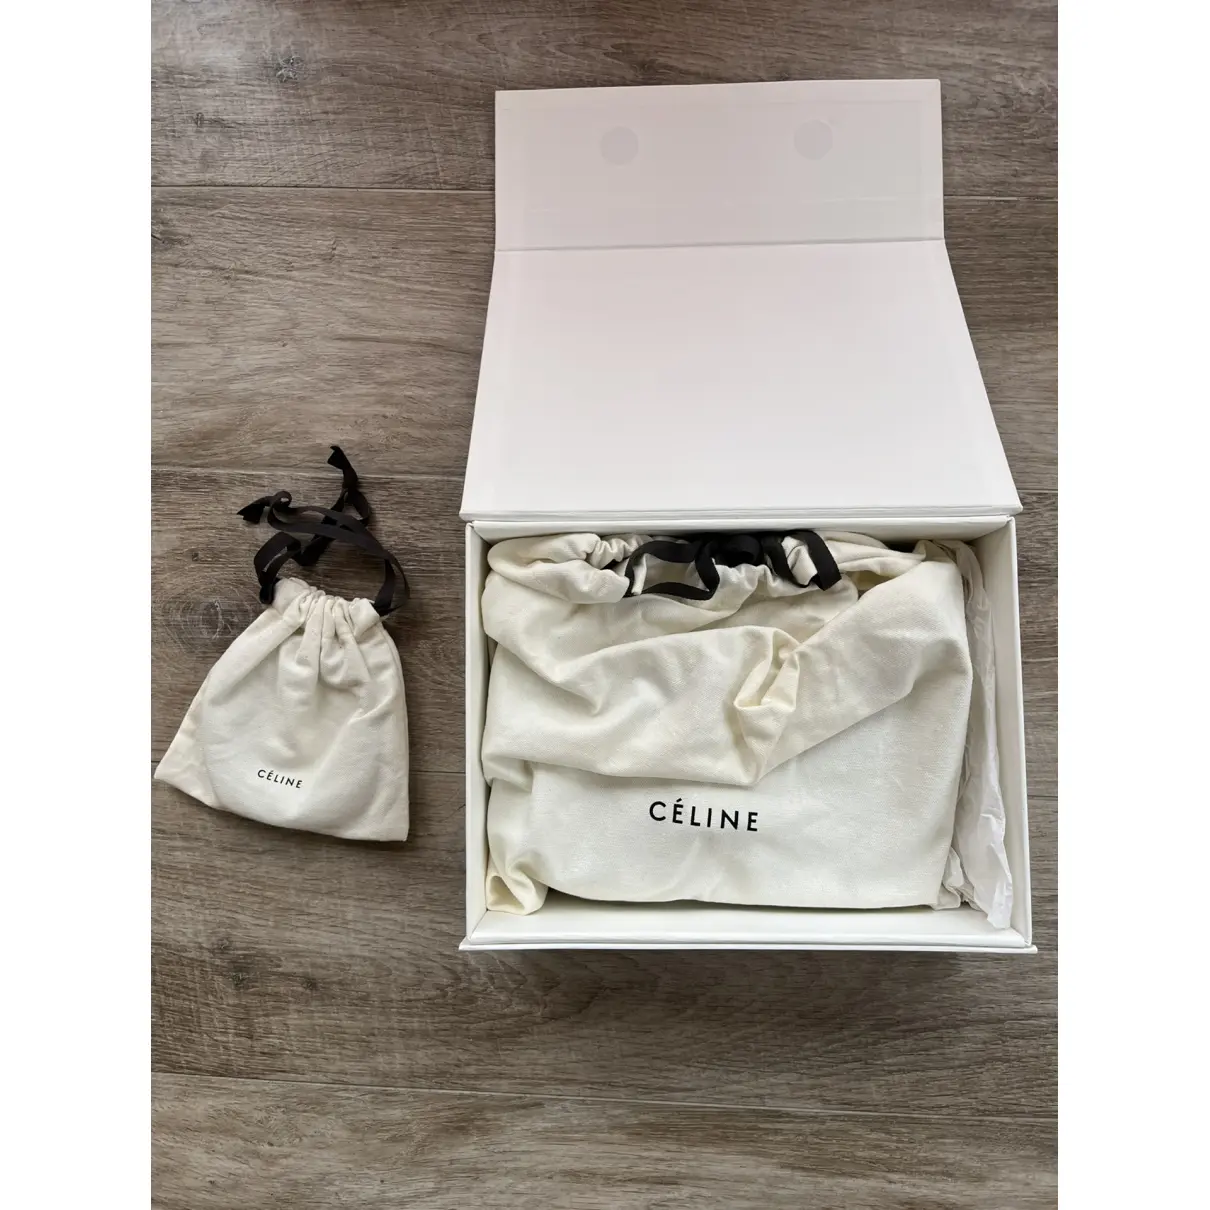 Buy Celine Classic leather crossbody bag online